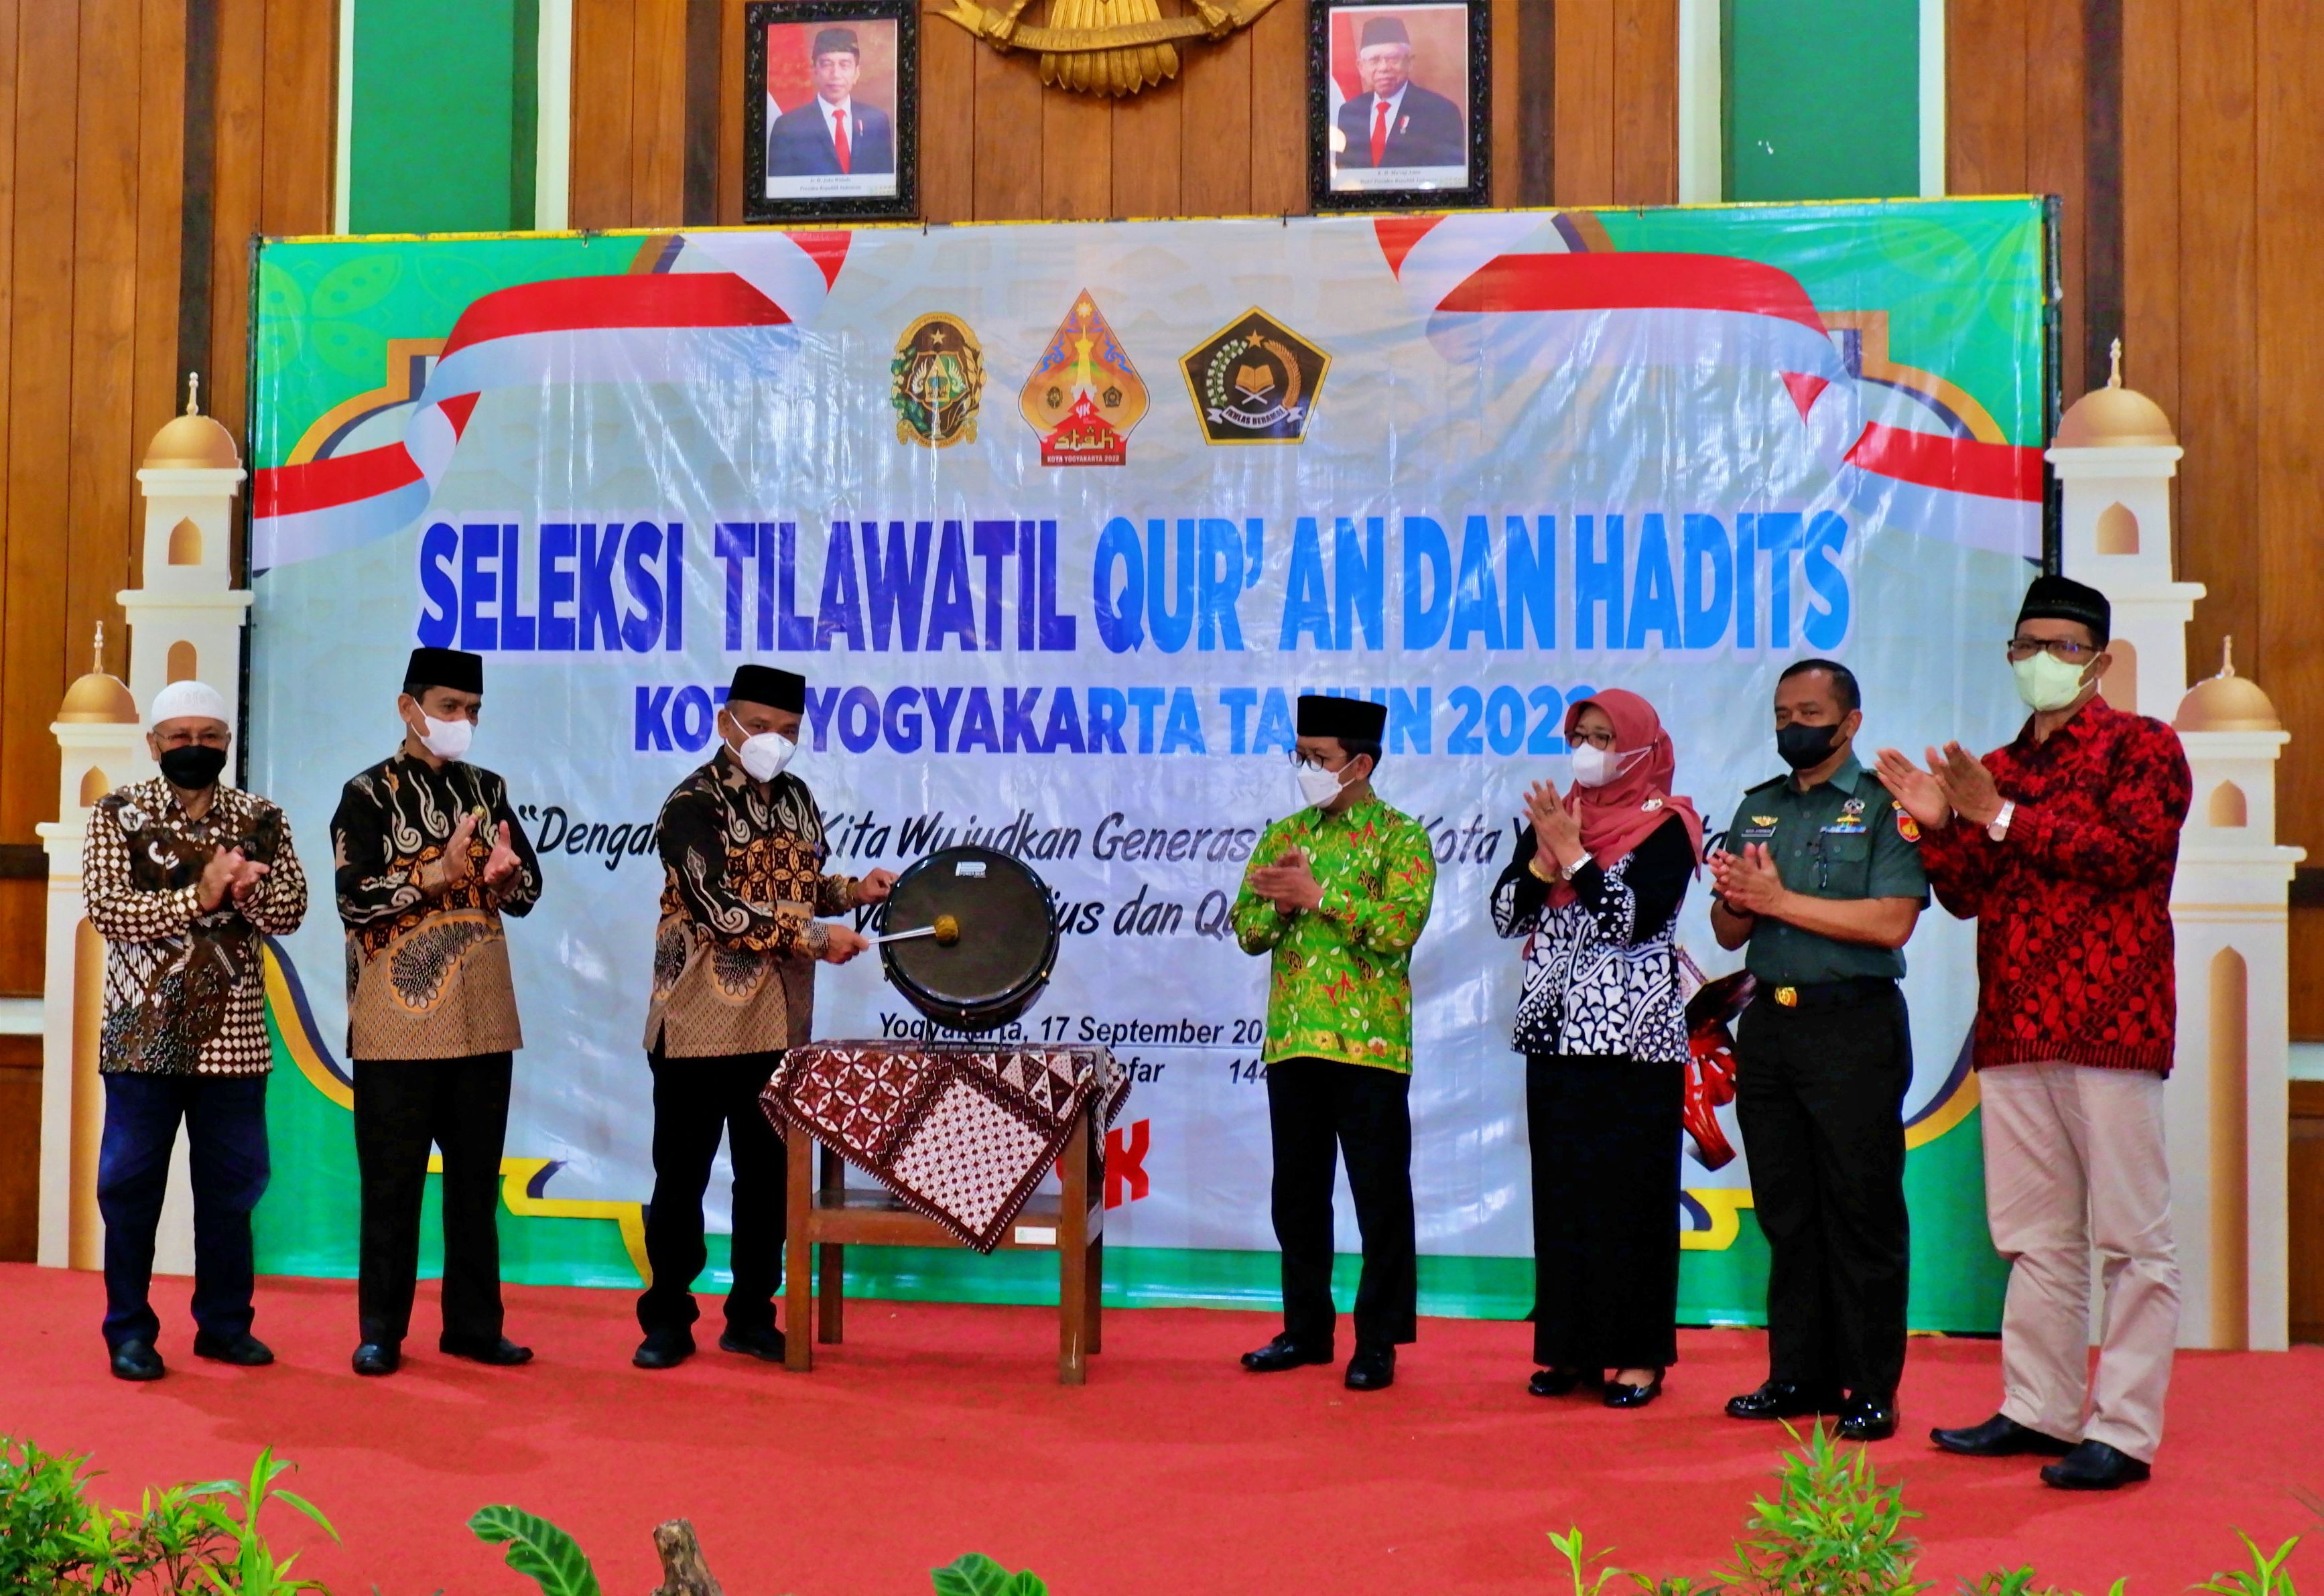 Seleksi Tilawatil Qur’an dan Hadits Kota Yogyakarta Tahun 2022